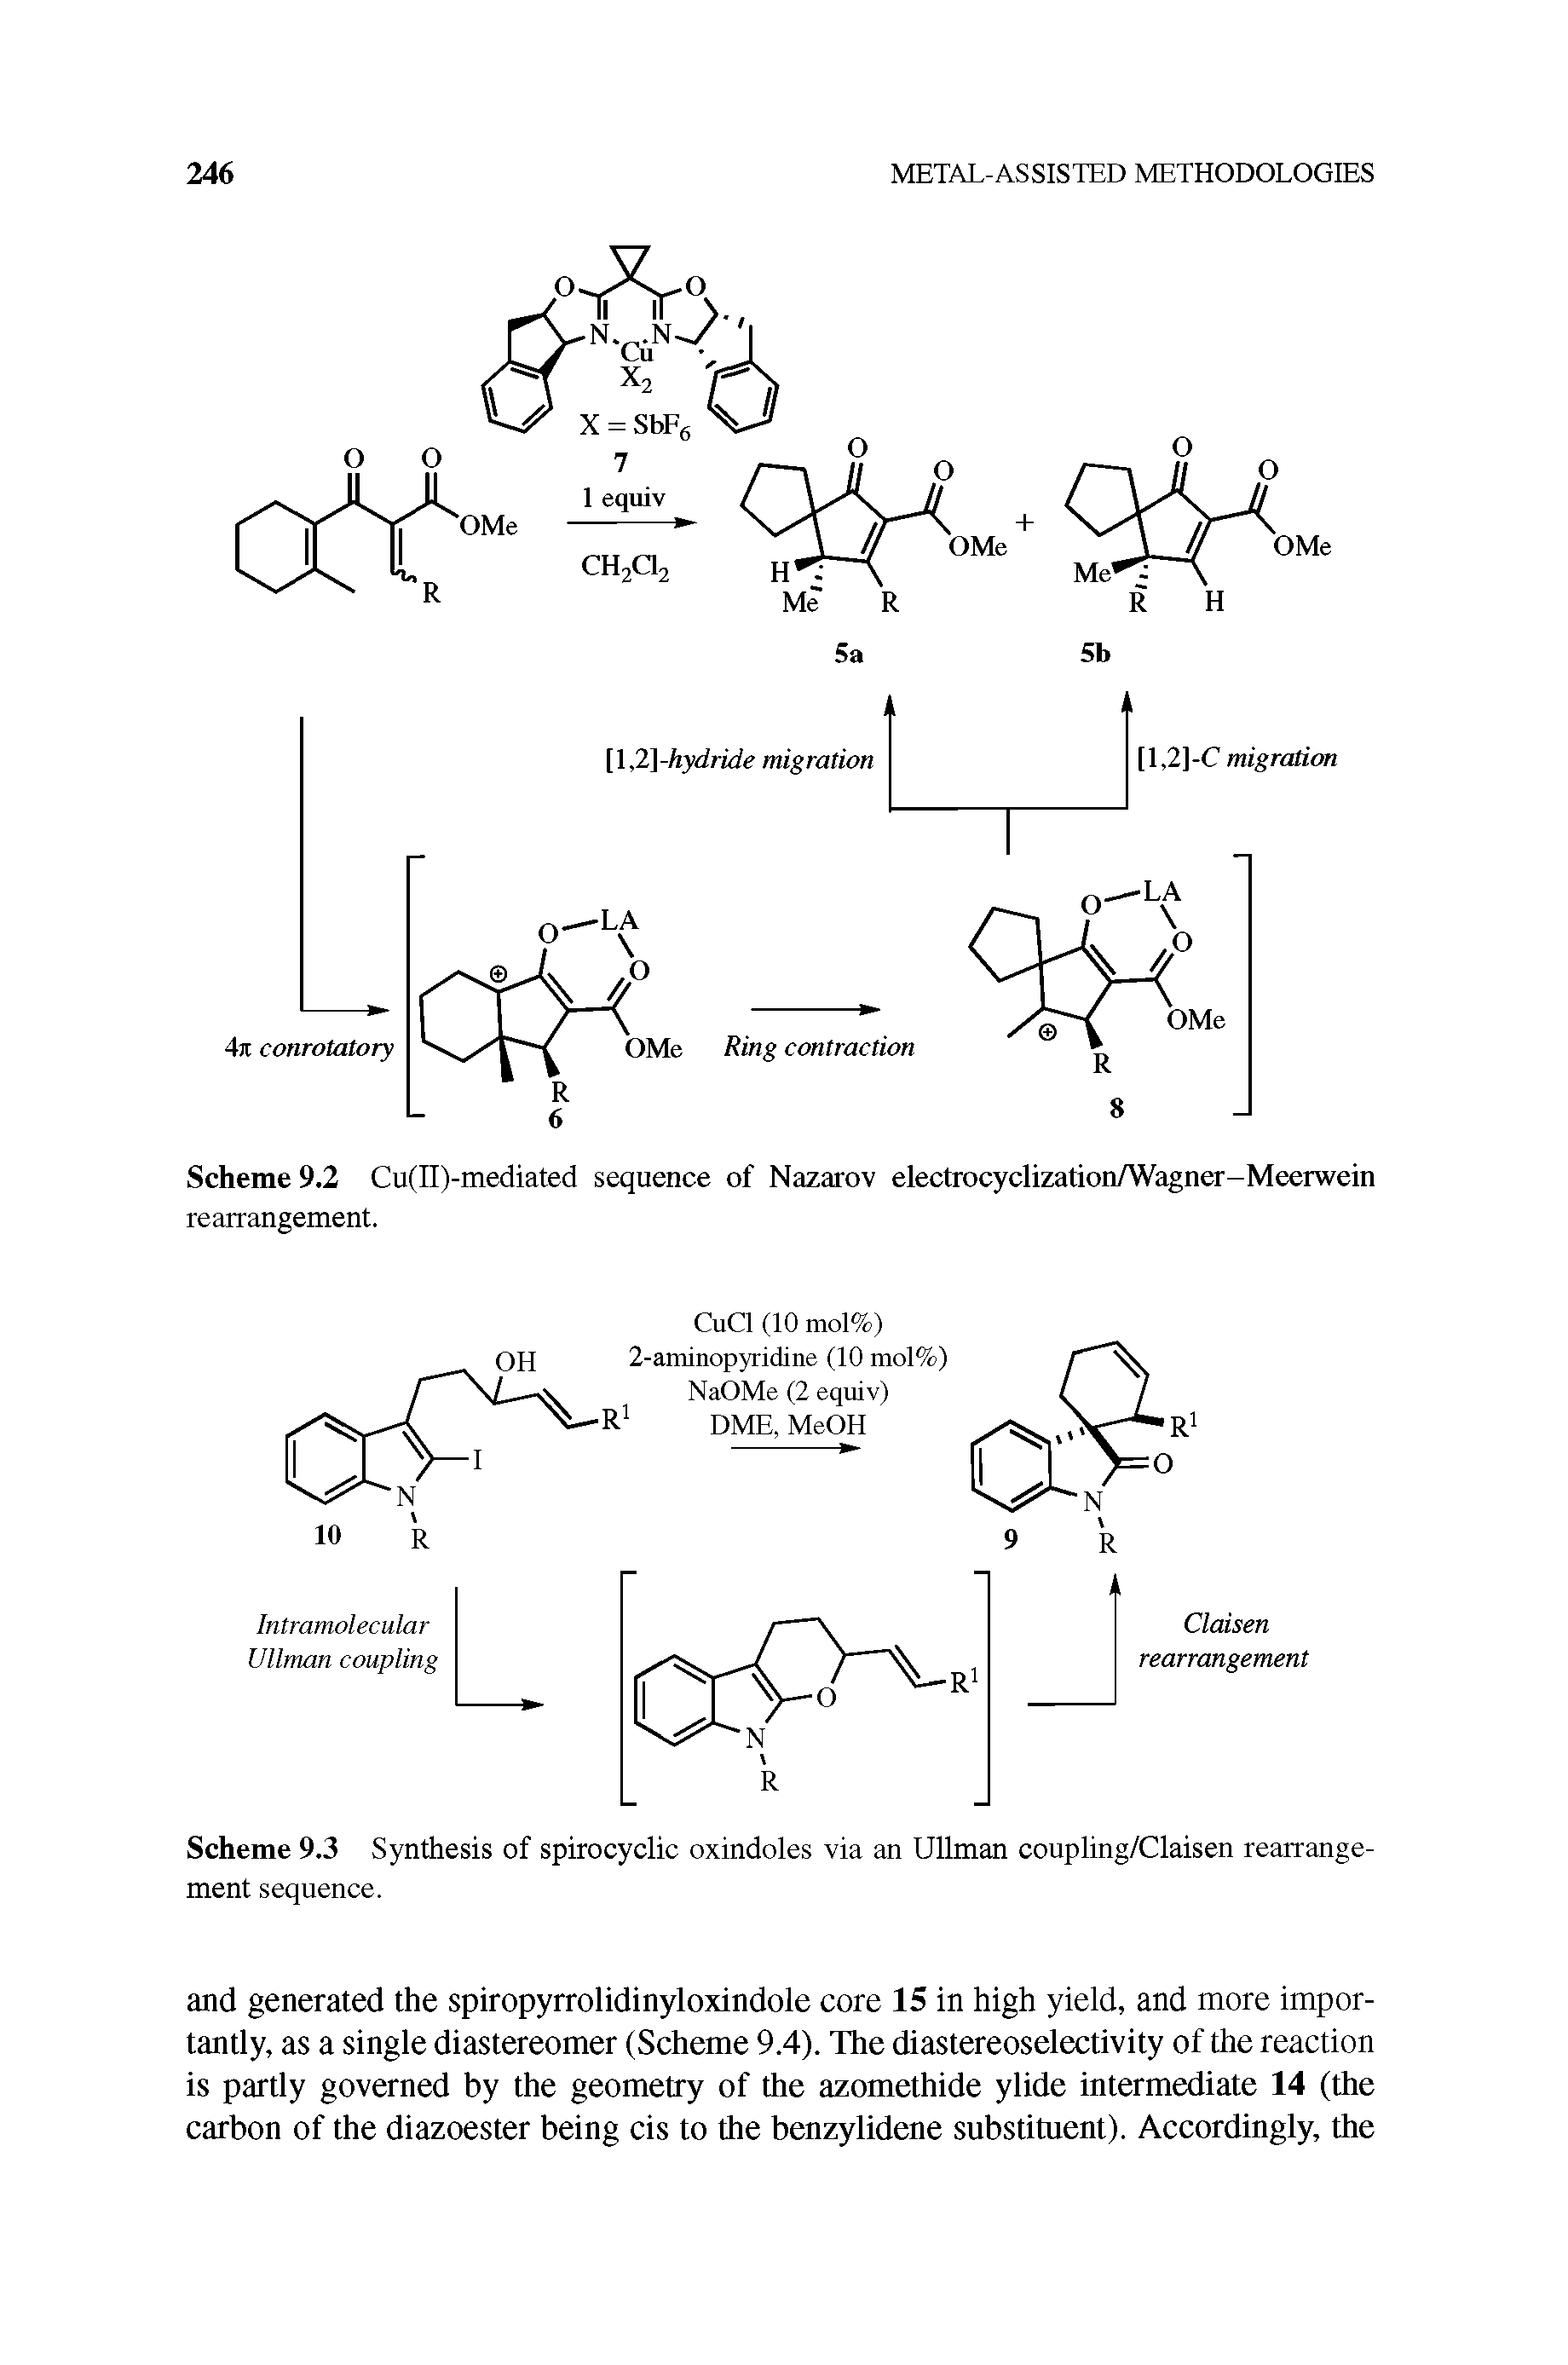 Scheme 9.3 Synthesis of spirocyclic oxindoles via an UUman coupling/Claisen rearrangement sequence.